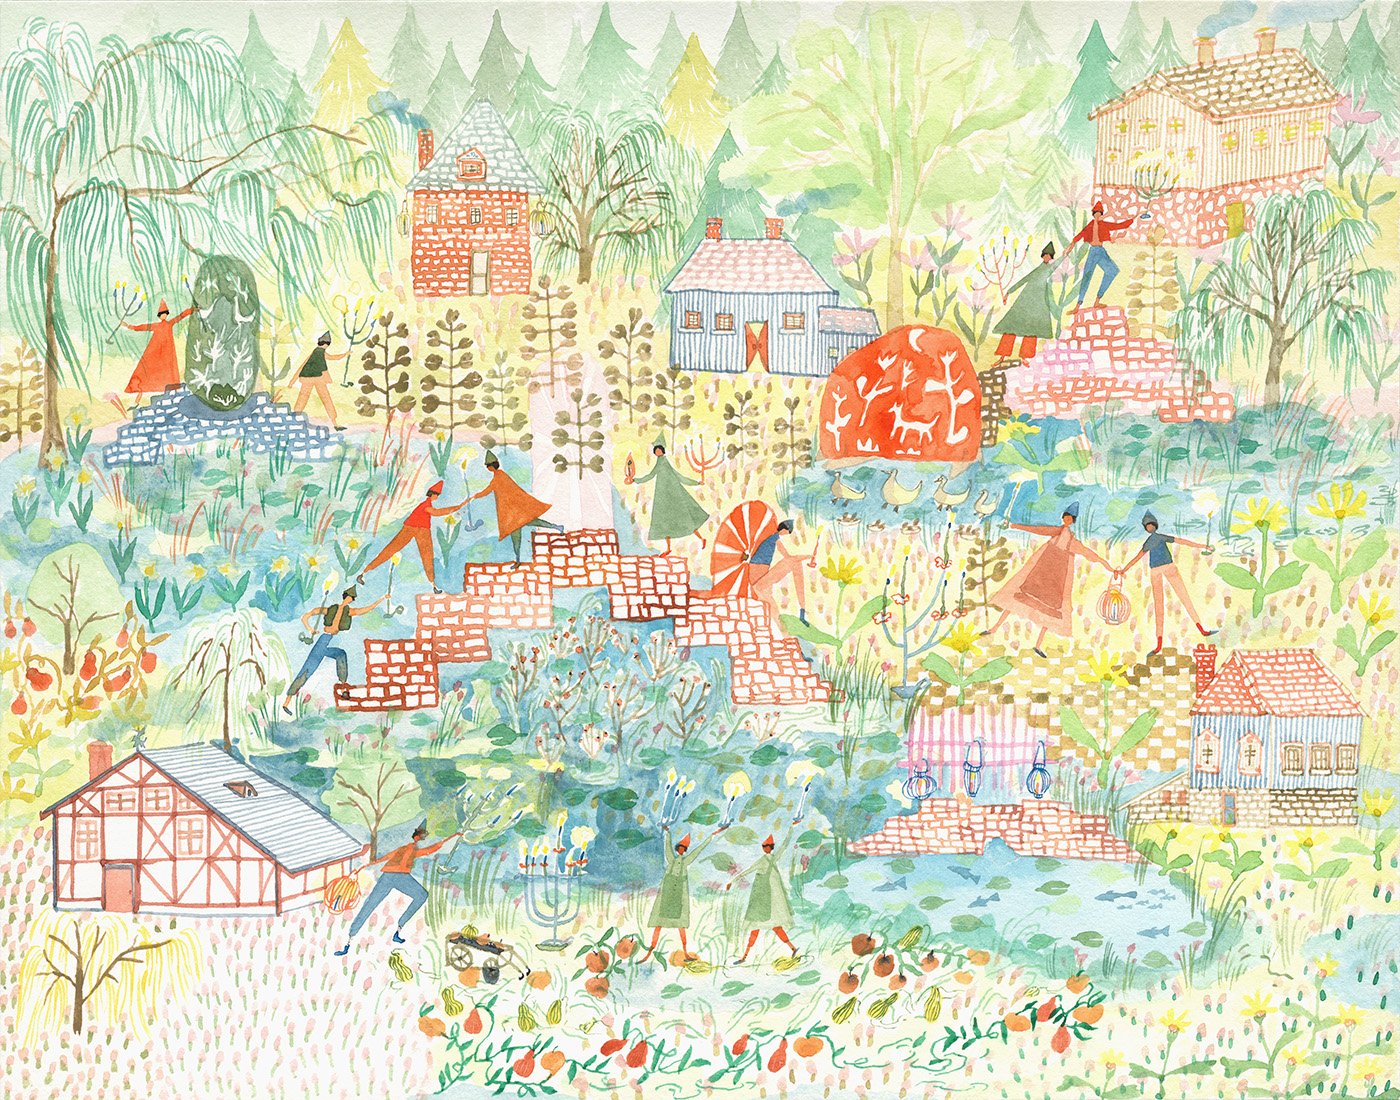   Lantern Festival   Watercolor on paper, 2021  11” x 14”  Sold 